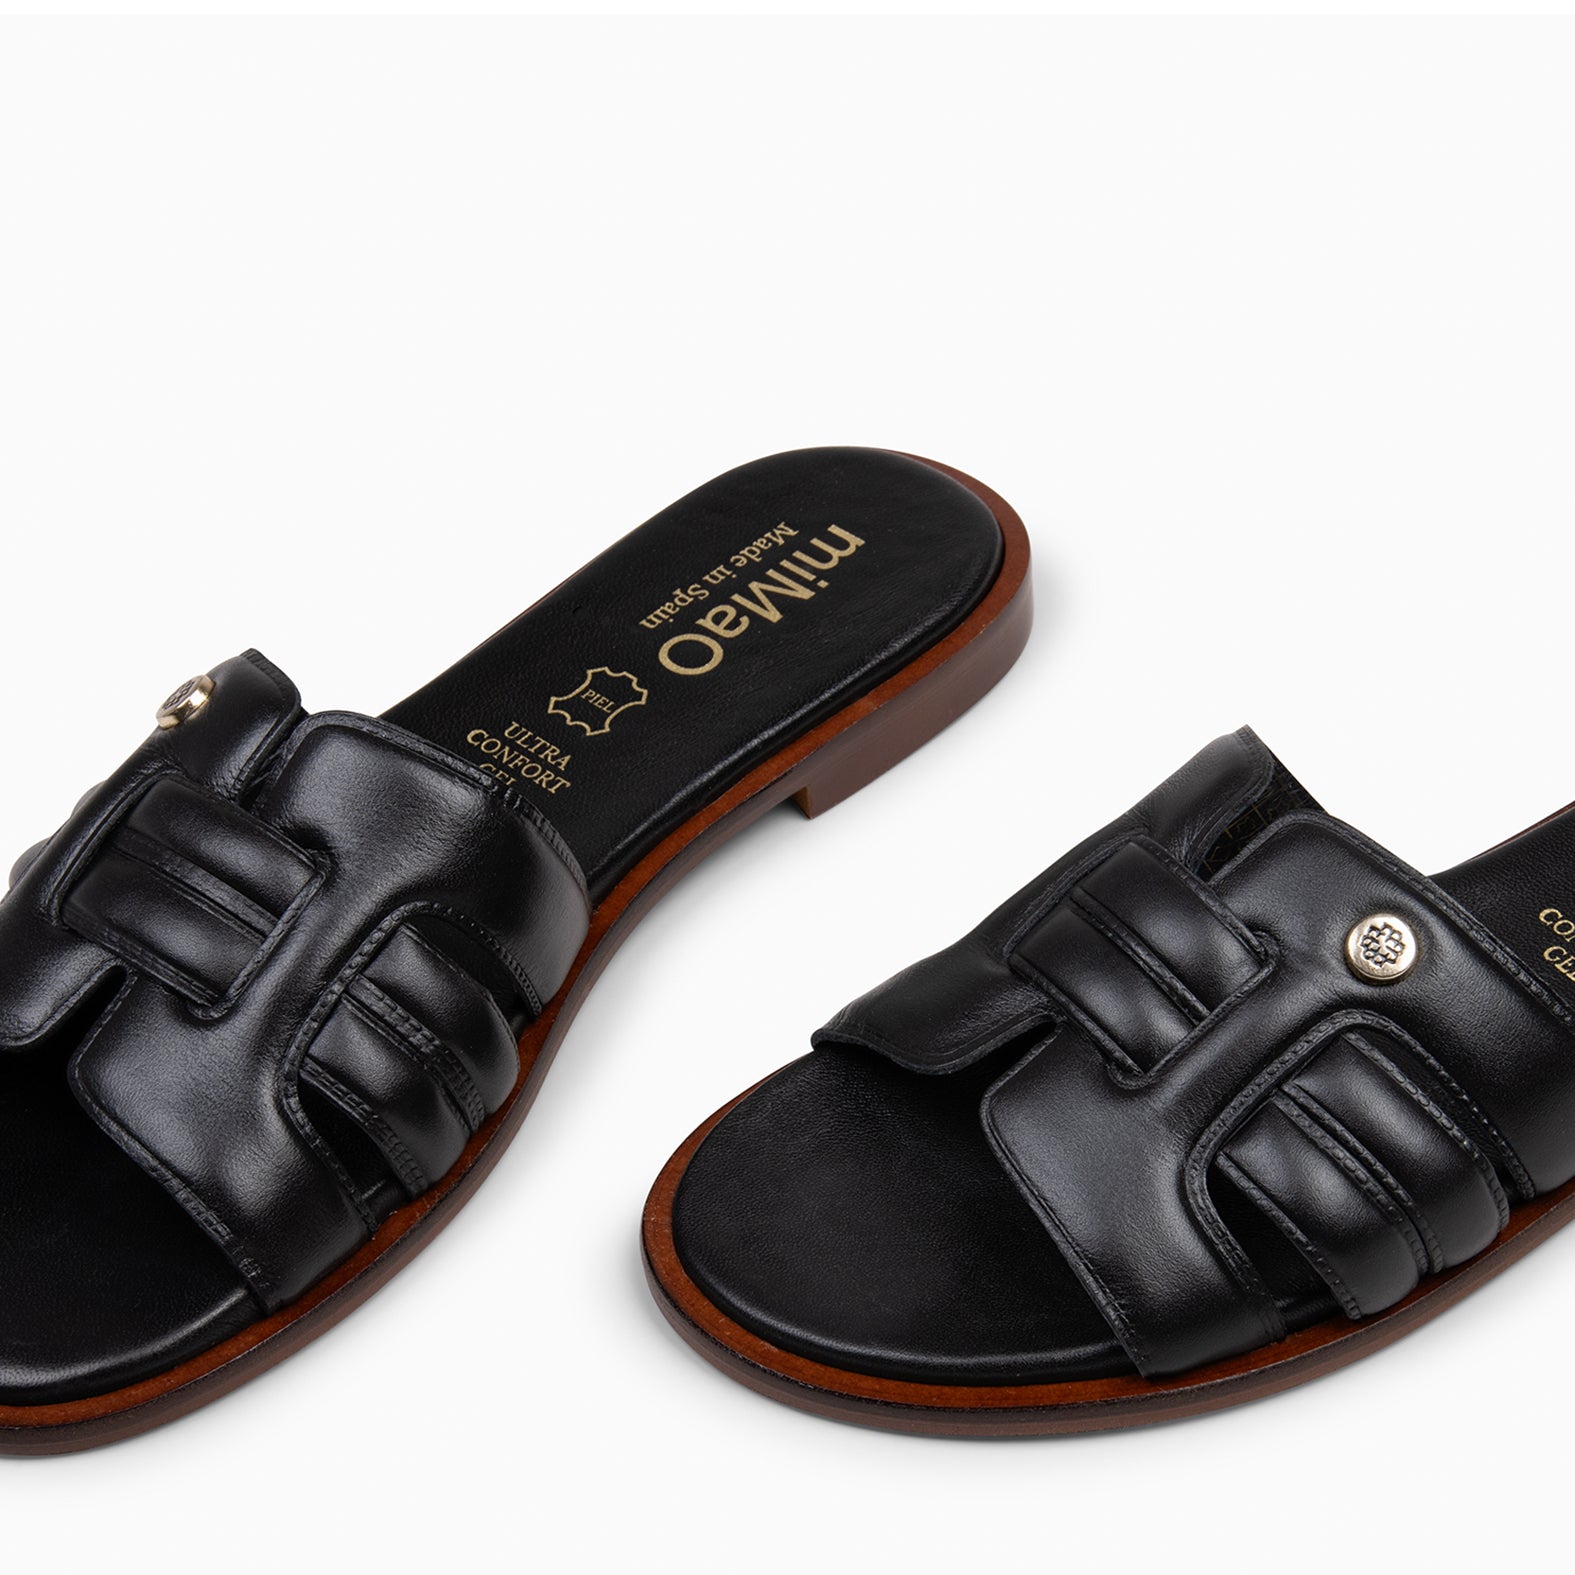 MENFIS – BLACK Flat Sandals